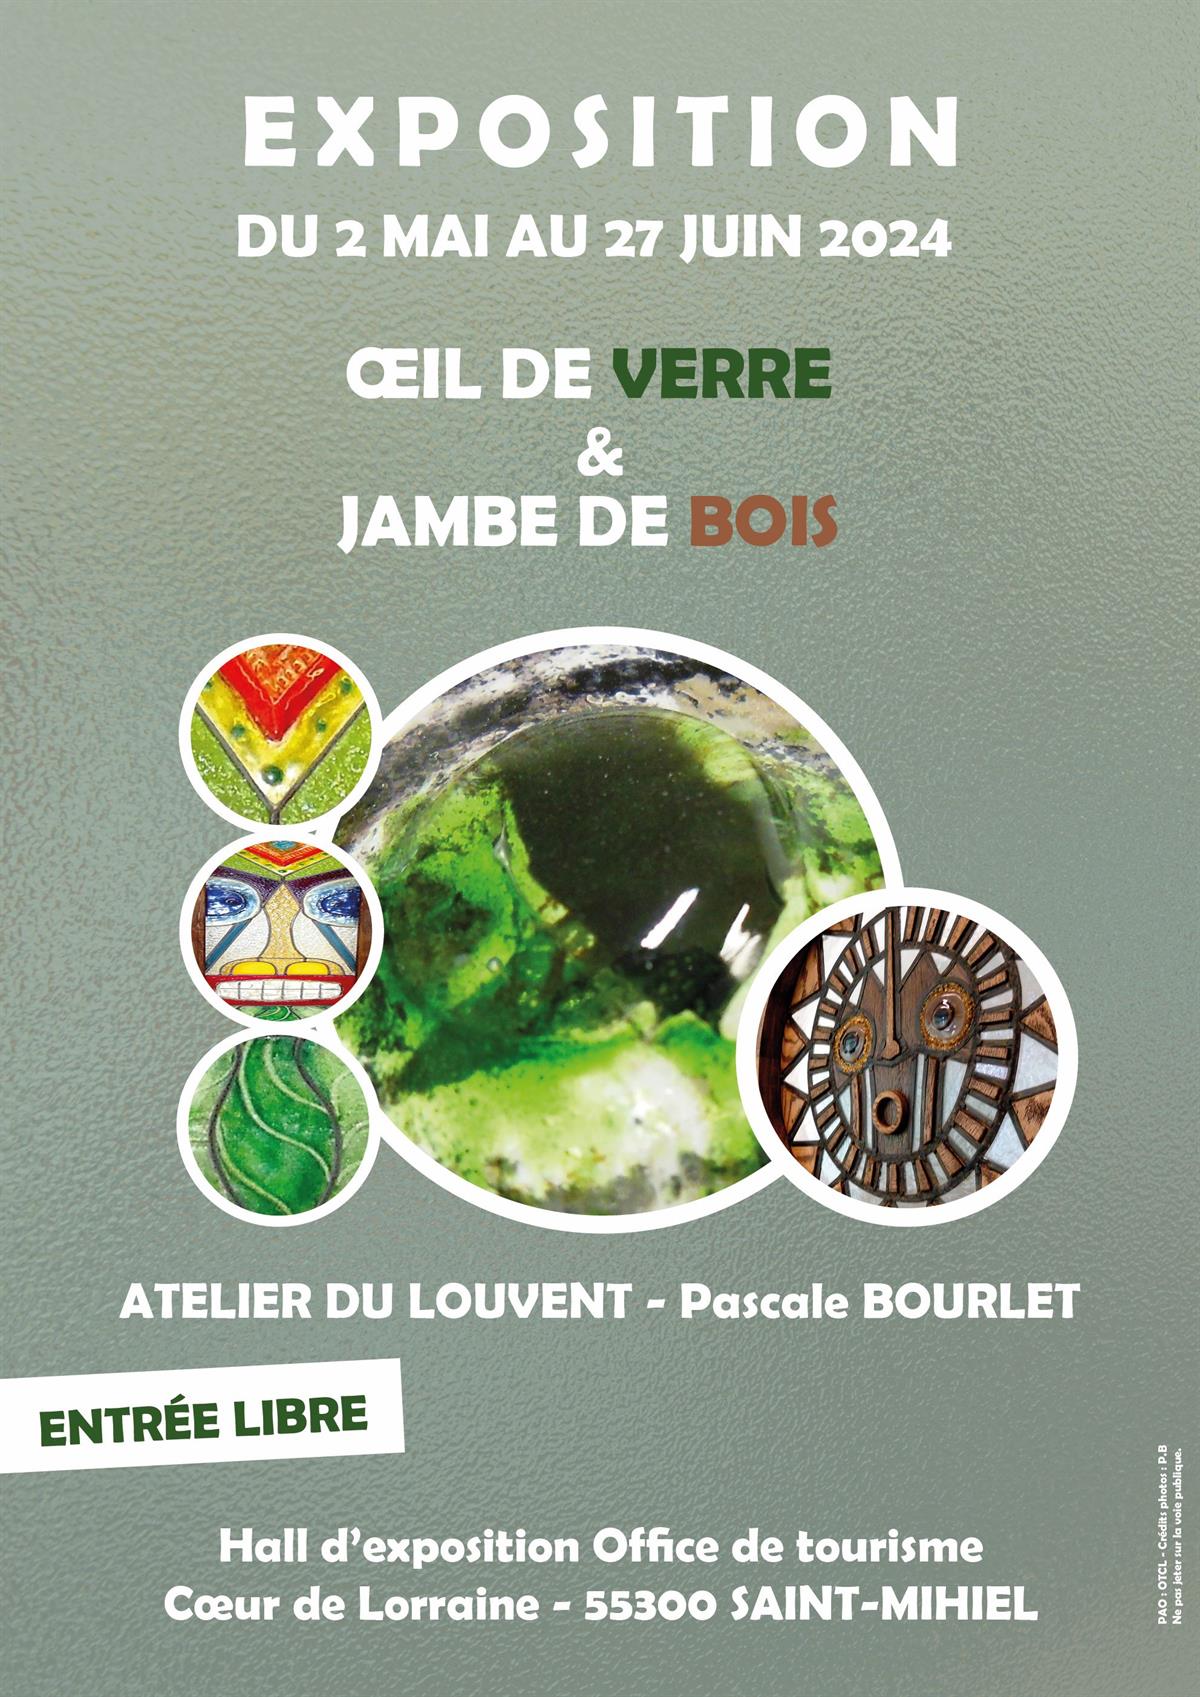 EXPOSITION : “ŒIL DE VERRE & JAMBE DE BOIS”